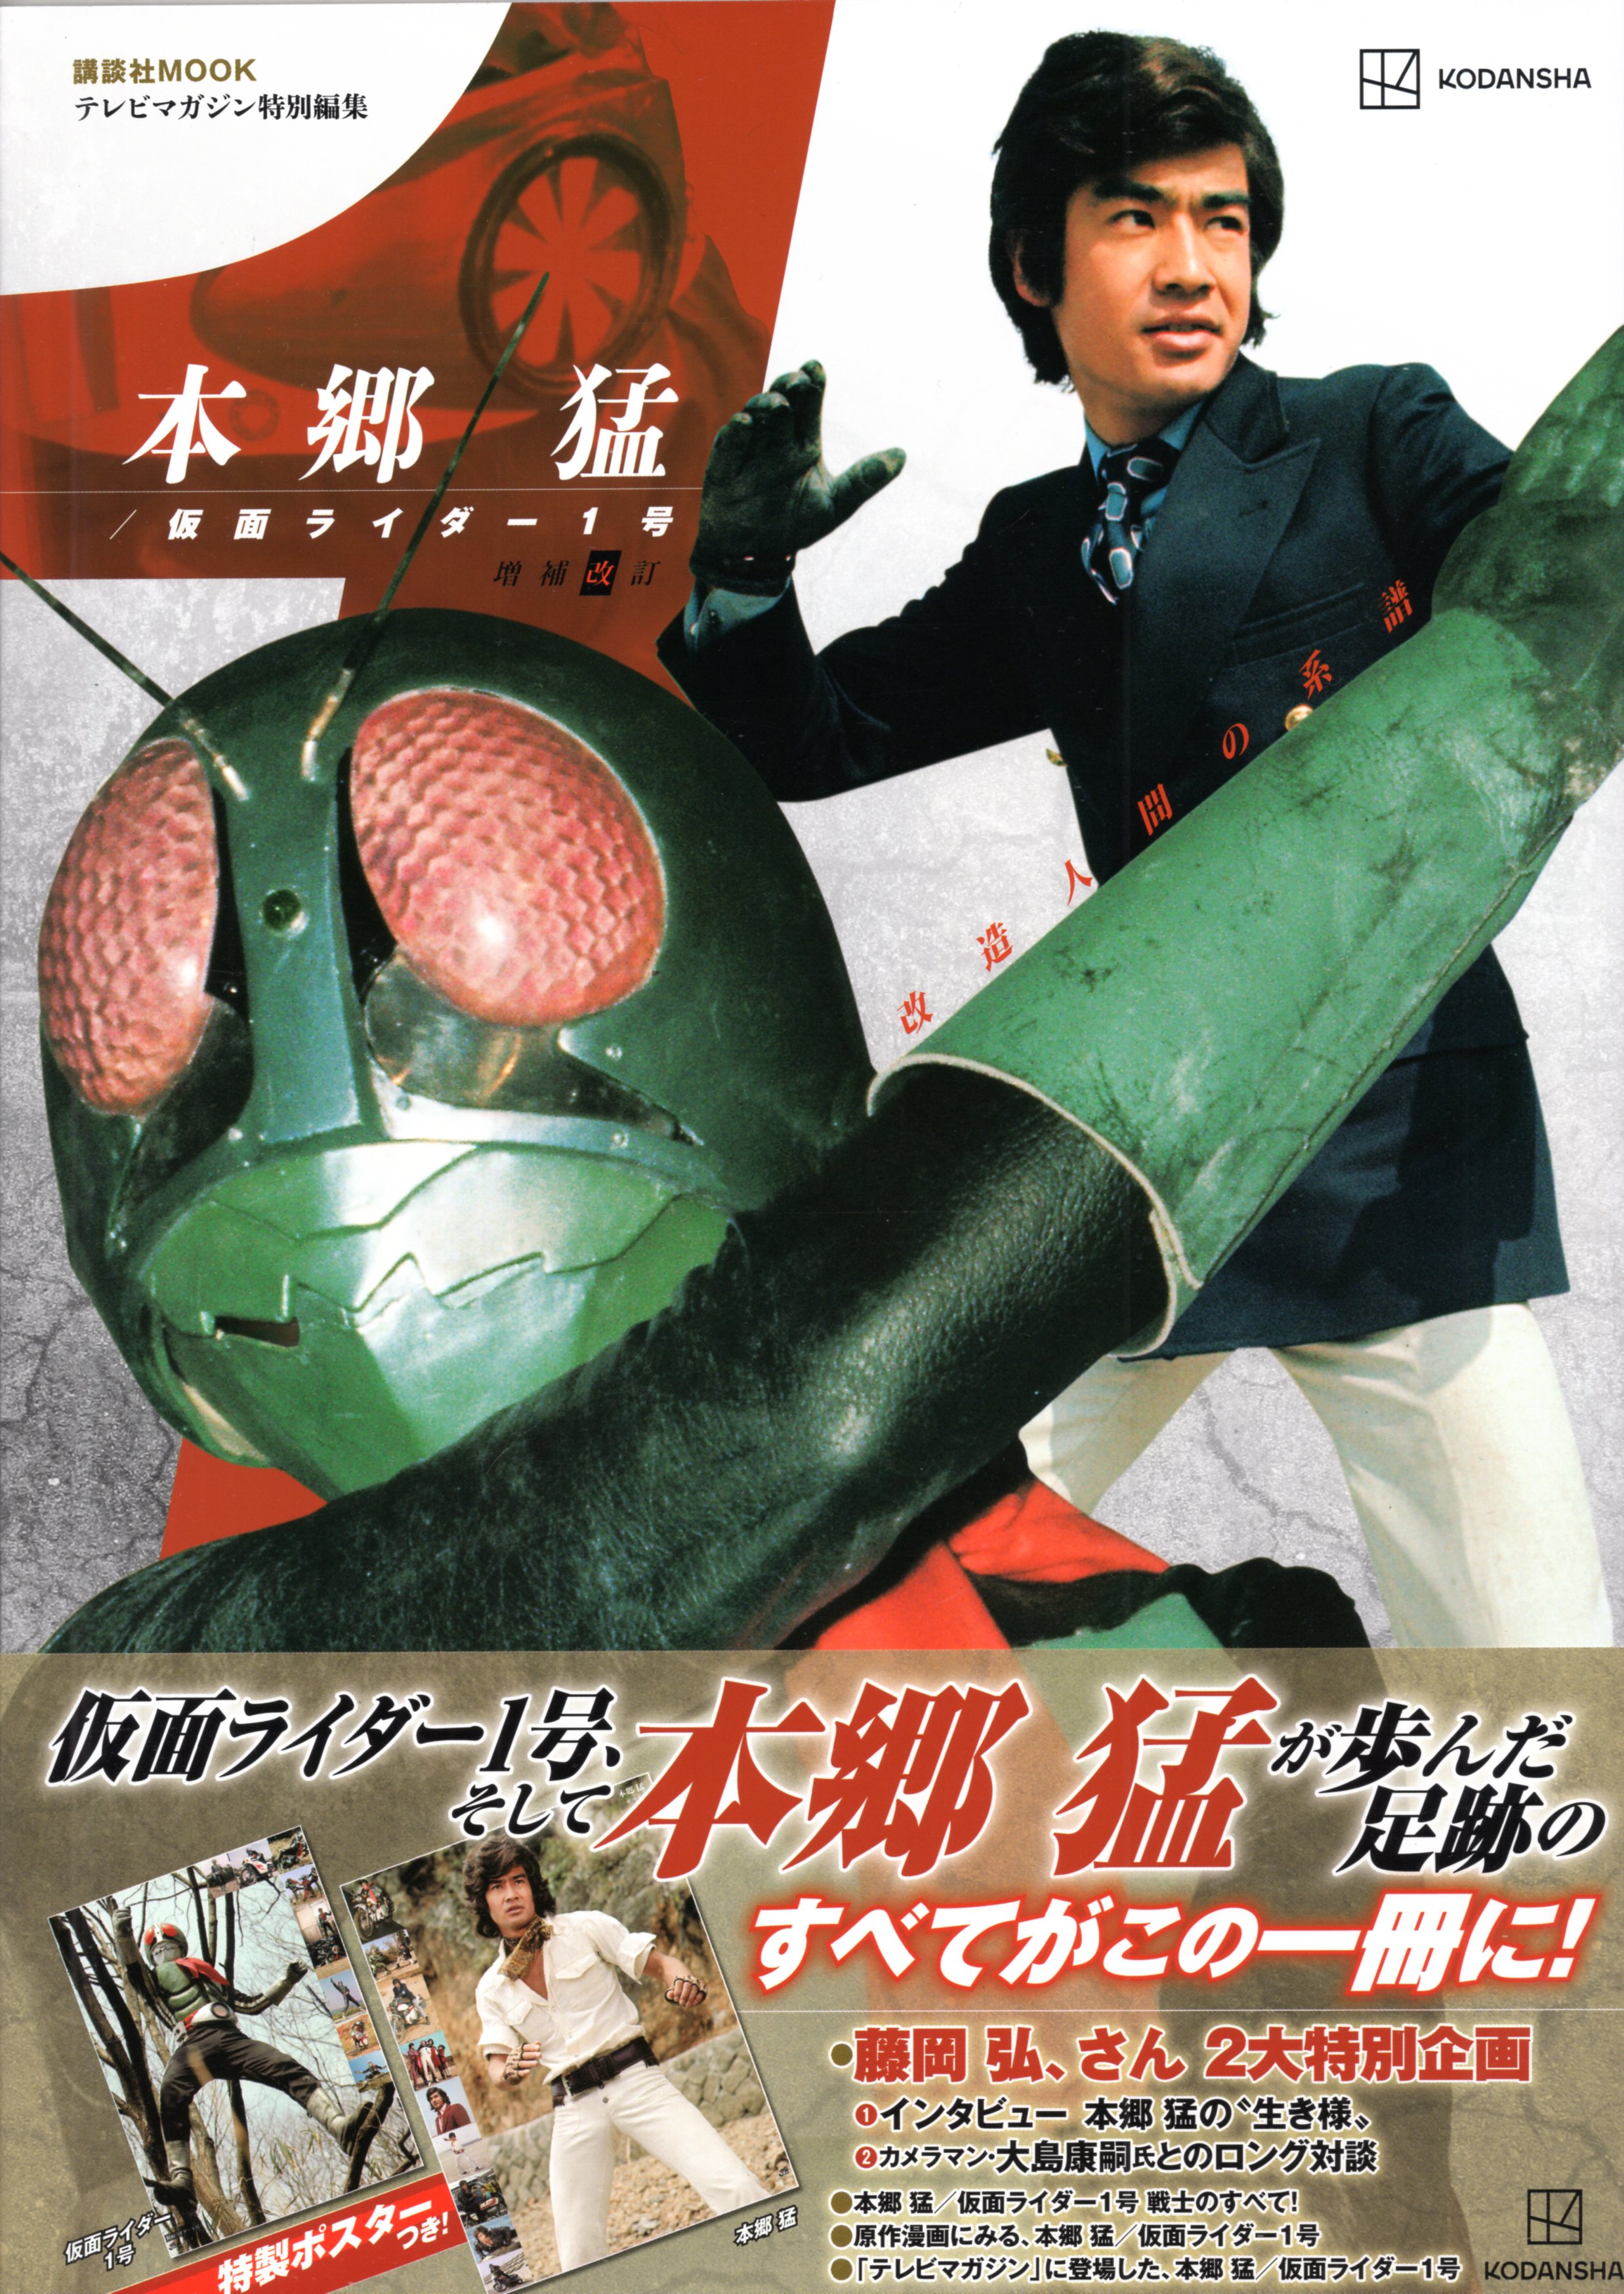 Special　revision)　Kodansha　Hongo　Magazine　Rider　Mook　TV　Obi)　MANDARAKE　在线商店　Editorial　enlarged　No.　Takeshi　Kamen　(With